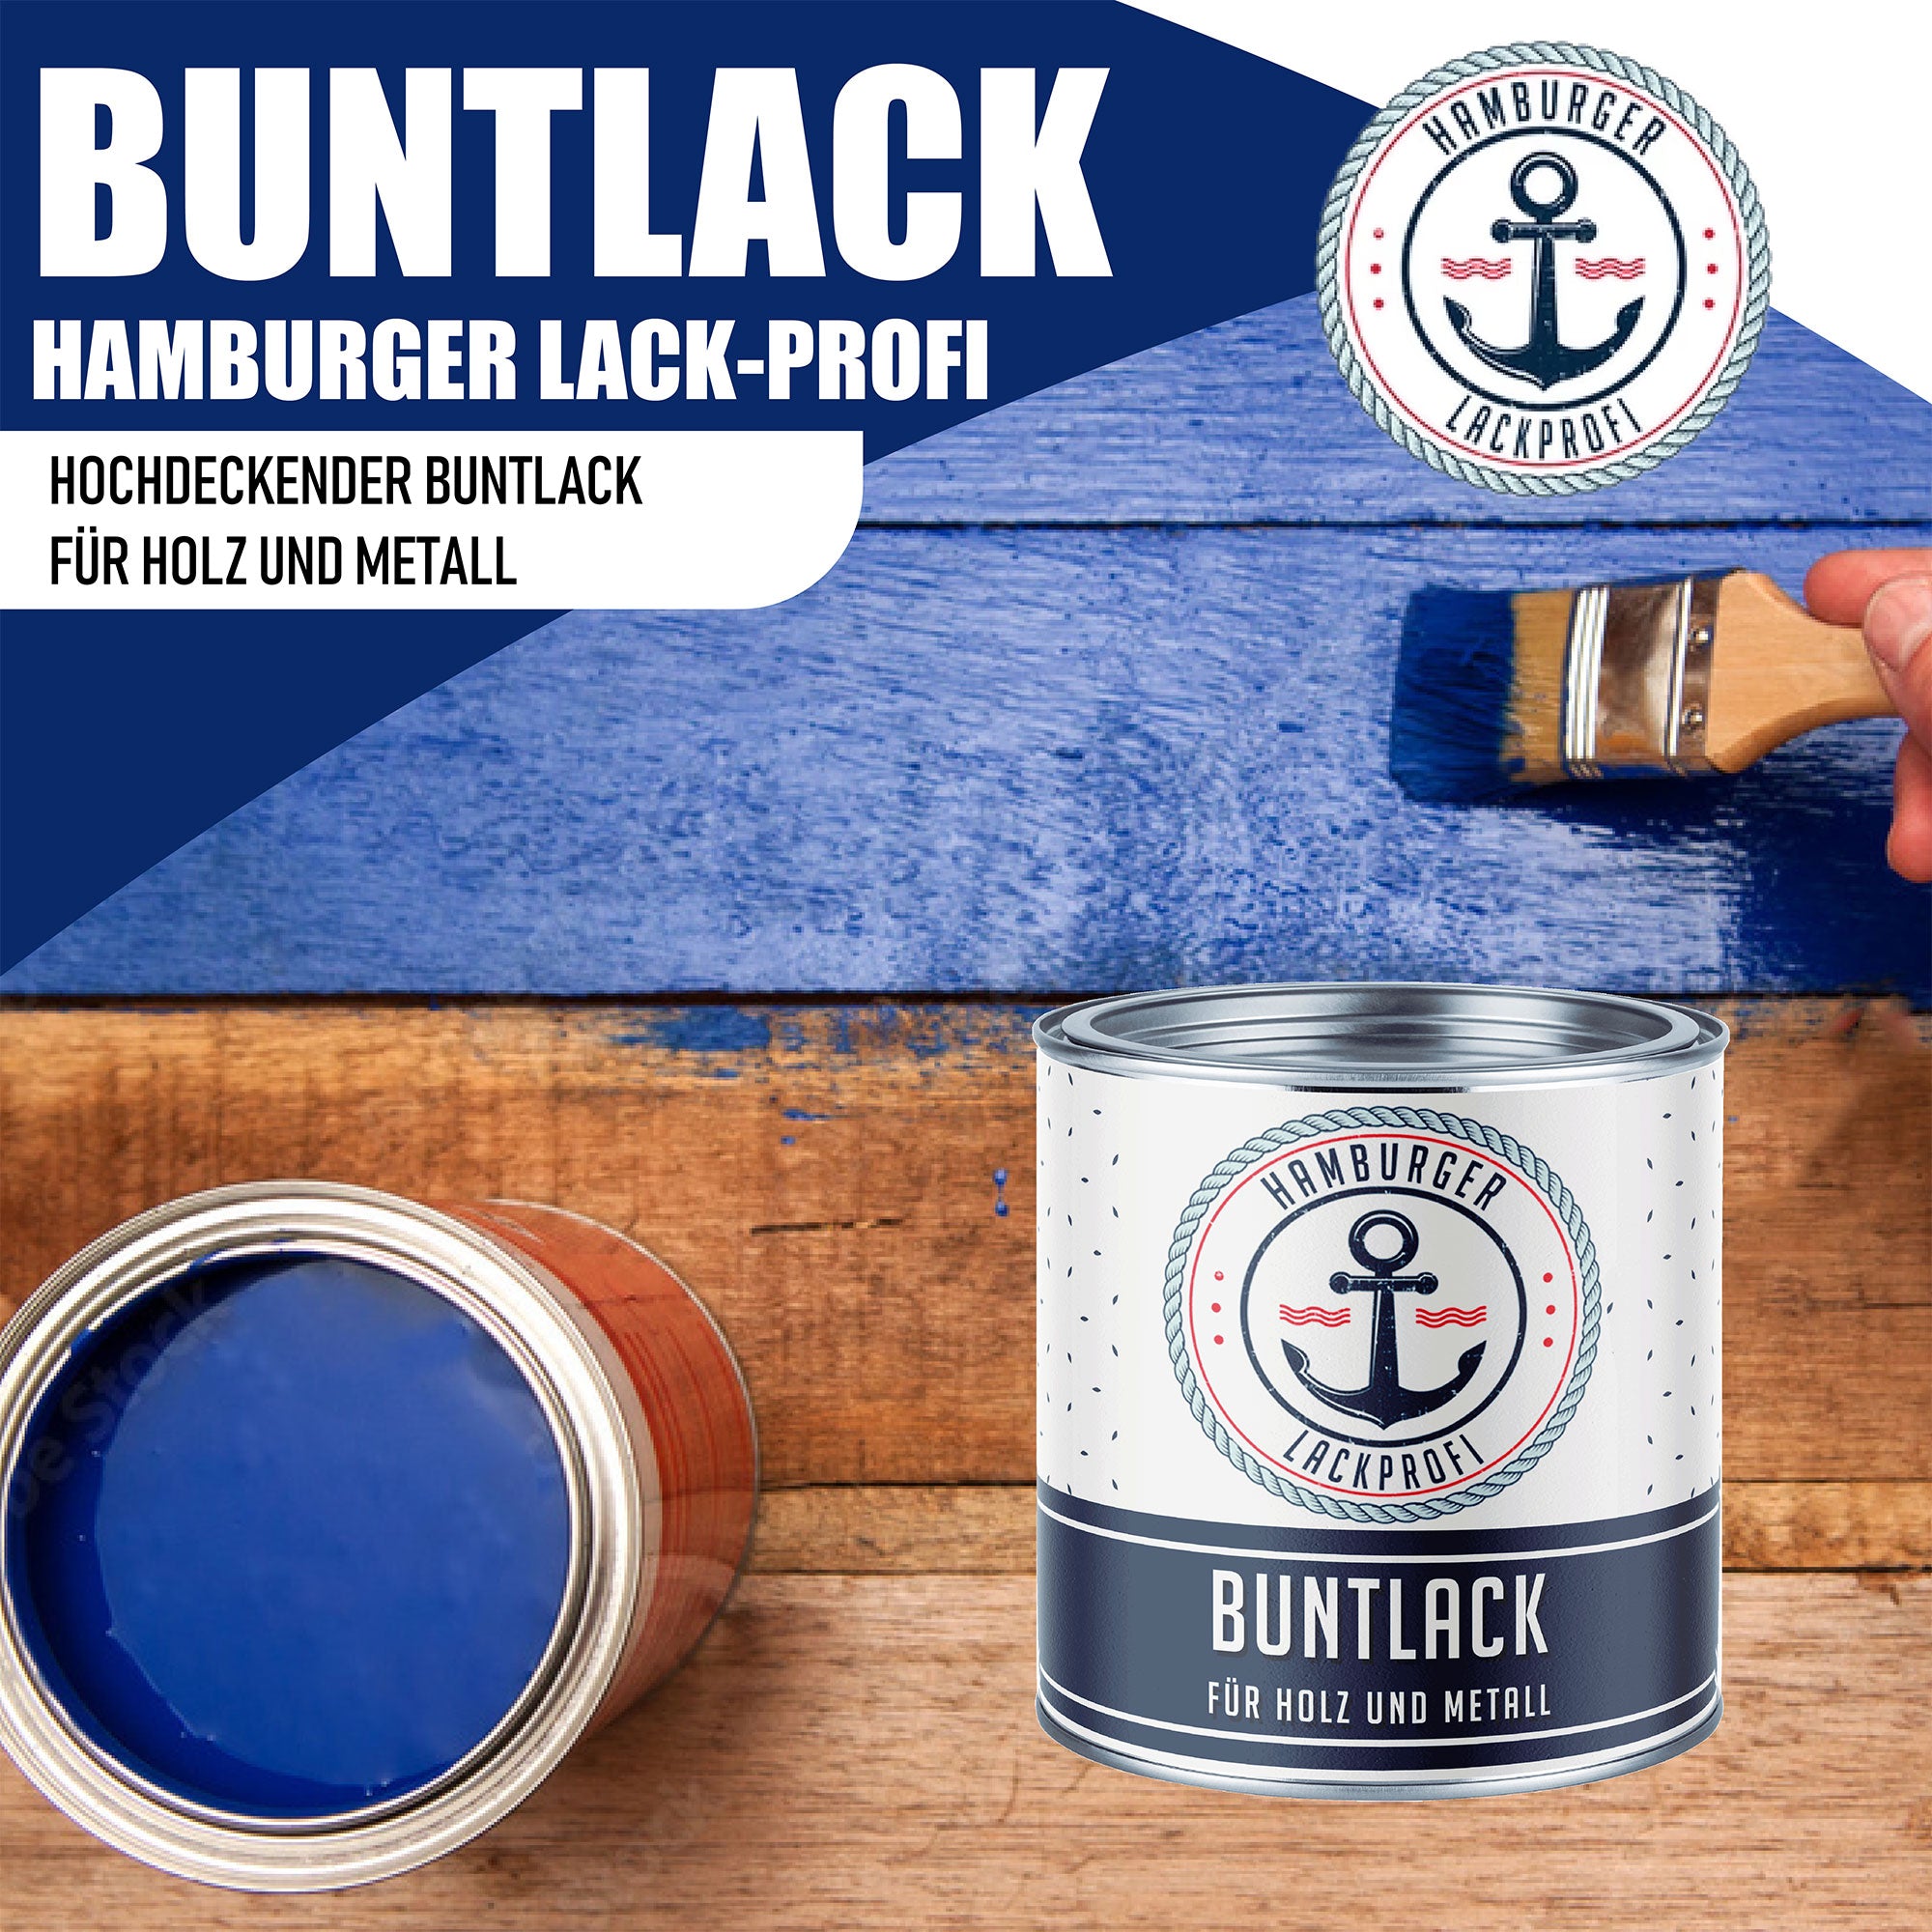 Hamburger Lack-Profi Buntlack Ozeanblau RAL 5020 - Robuster Kunstharzlack